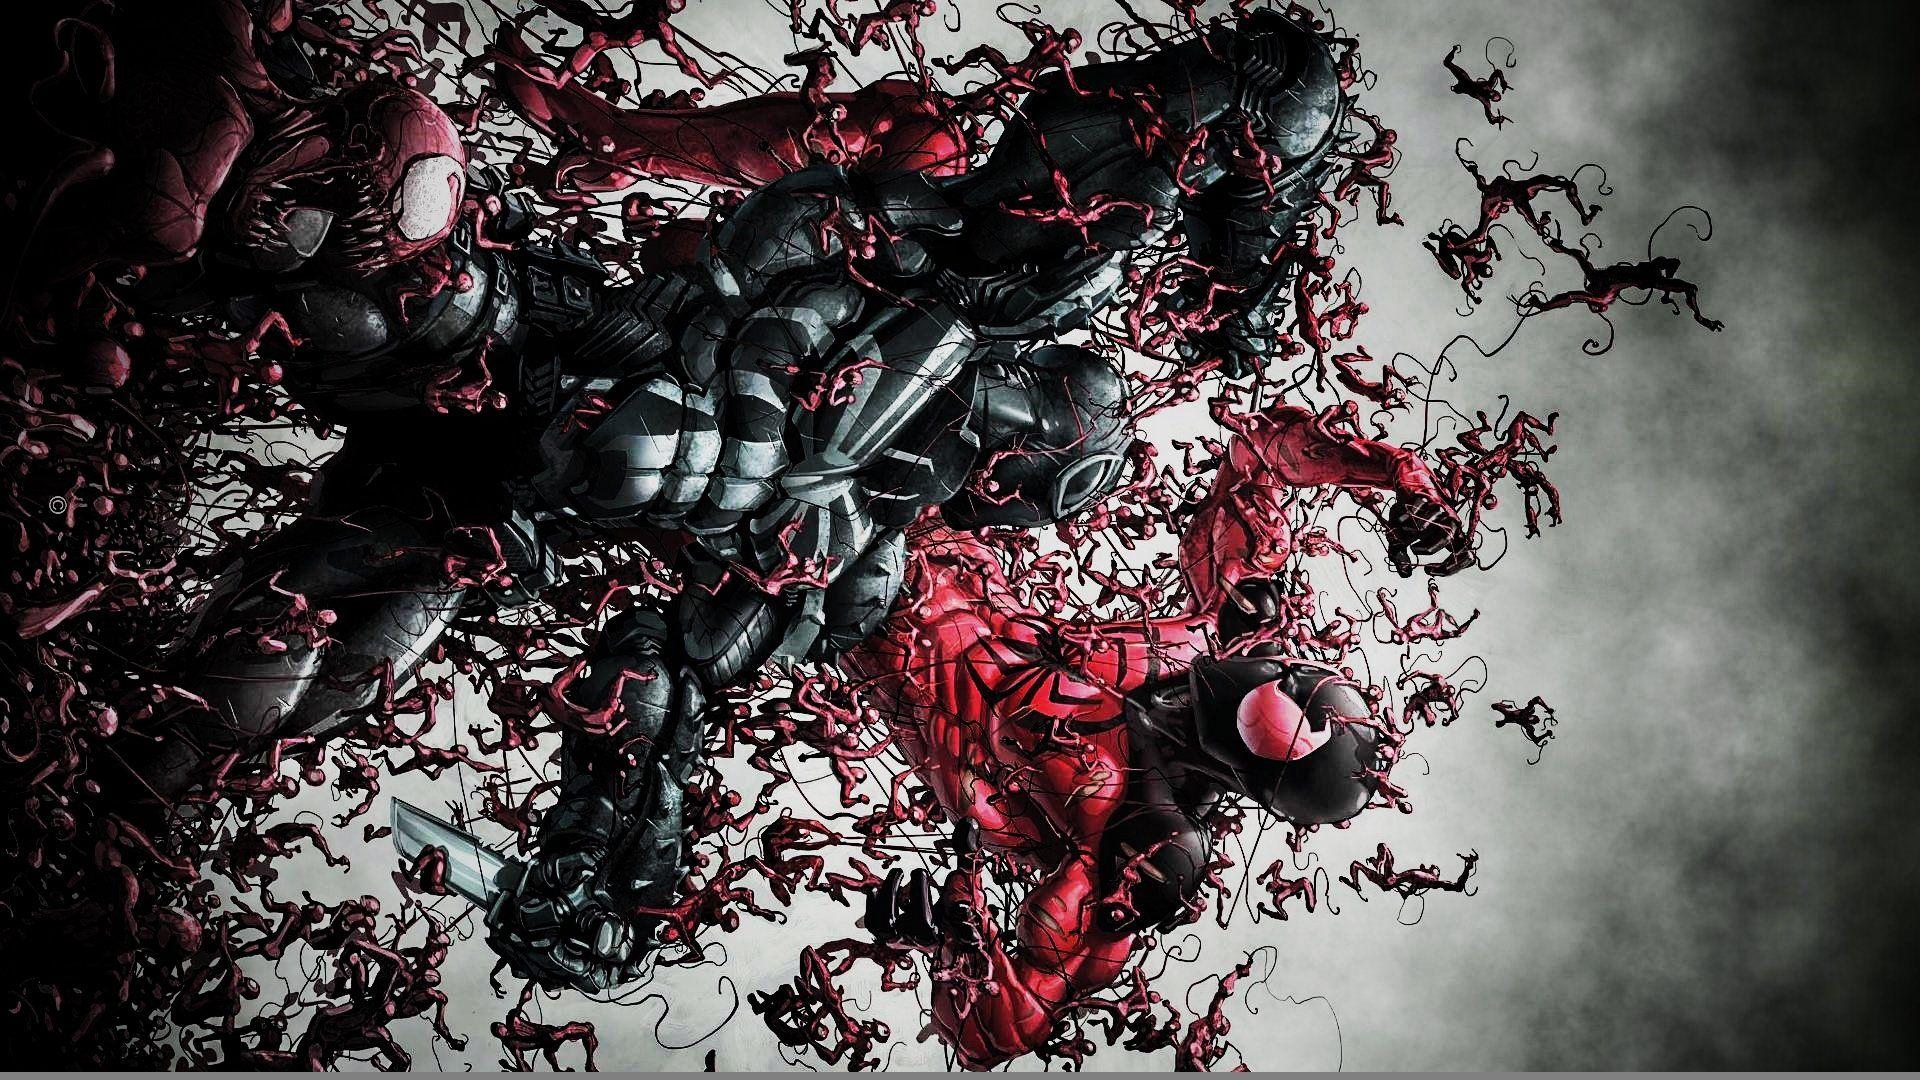 Featured image of post Deadpool Venom Wallpaper Hd Latest post is deadpool venom marvel comics 4k wallpaper